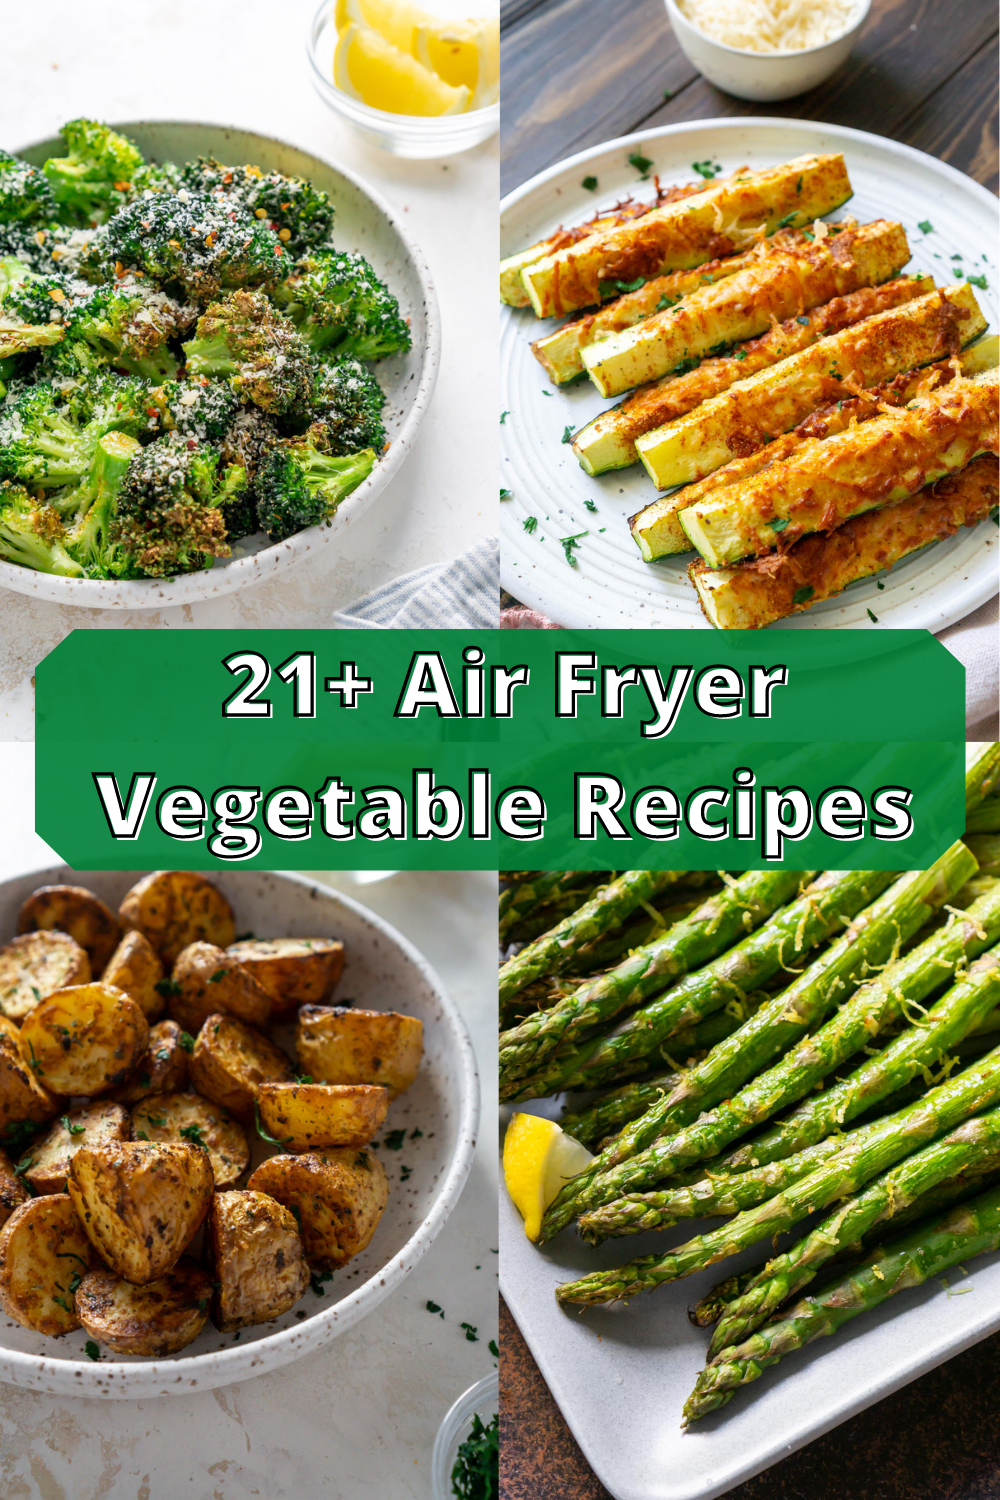 https://jz-eats.com/wp-content/uploads/2021/05/air_fryer_vegetables.png